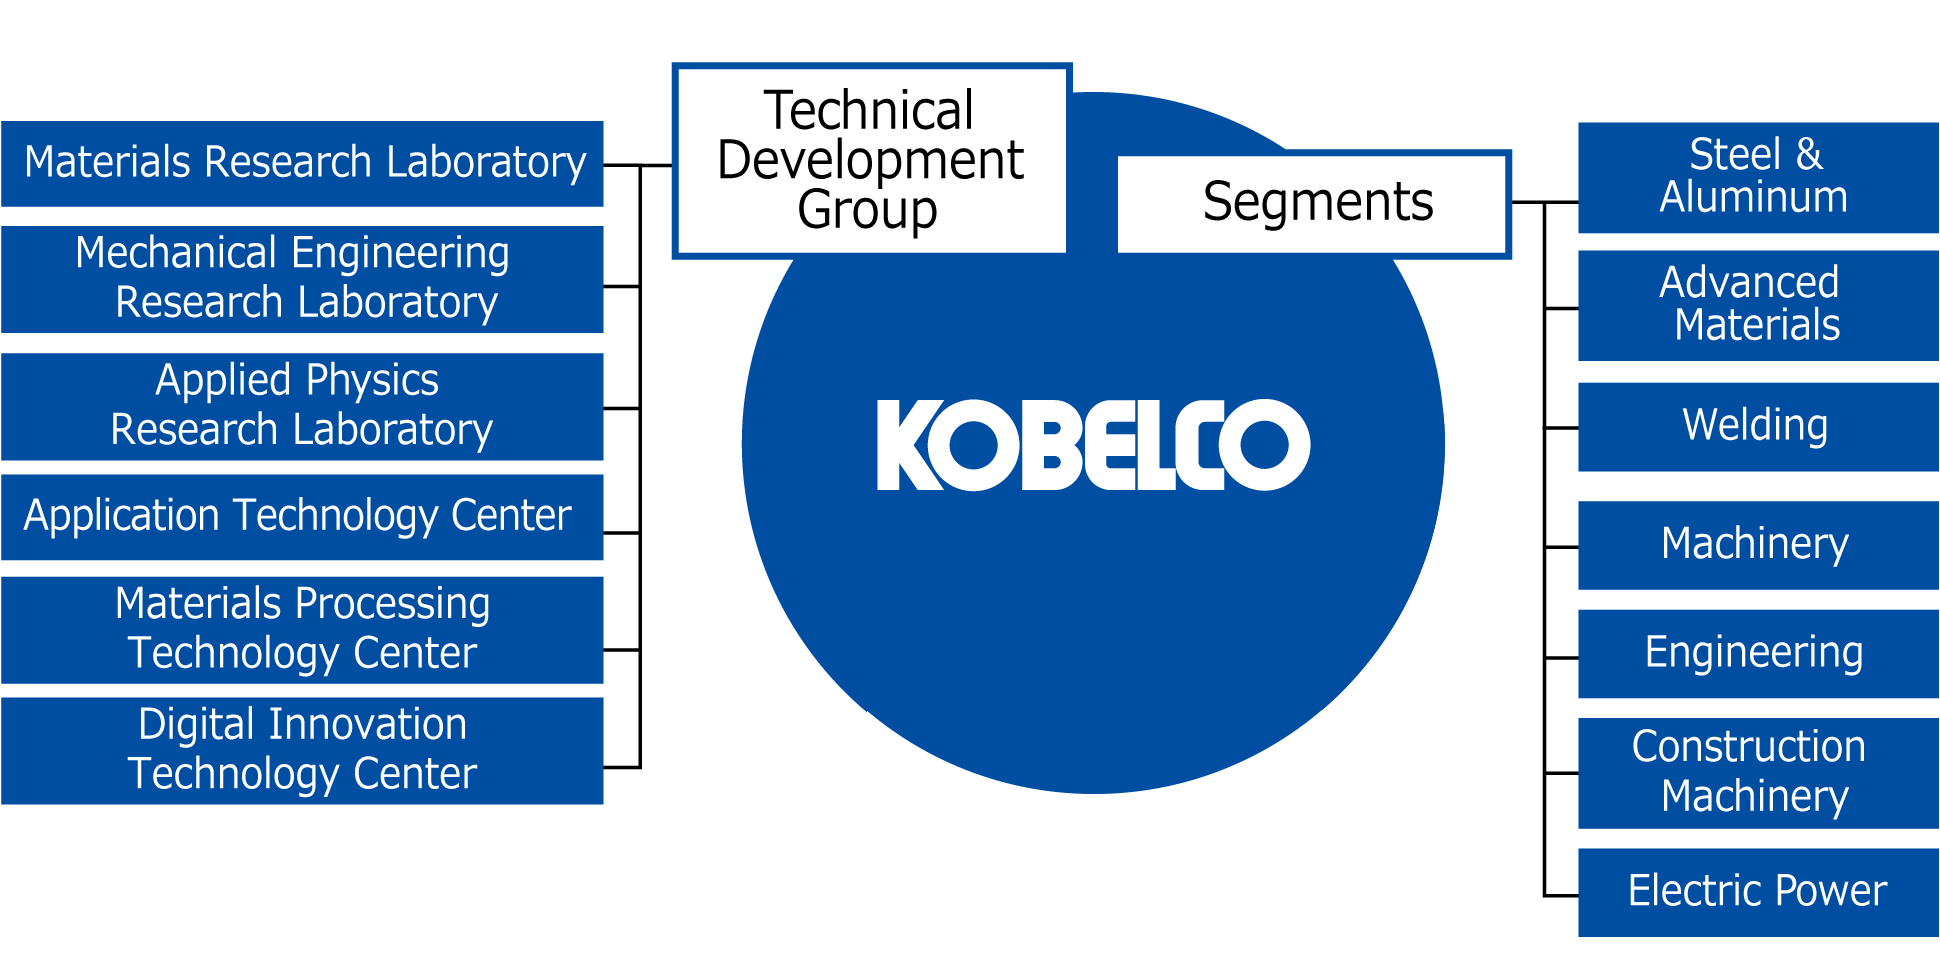 Technical Development Group